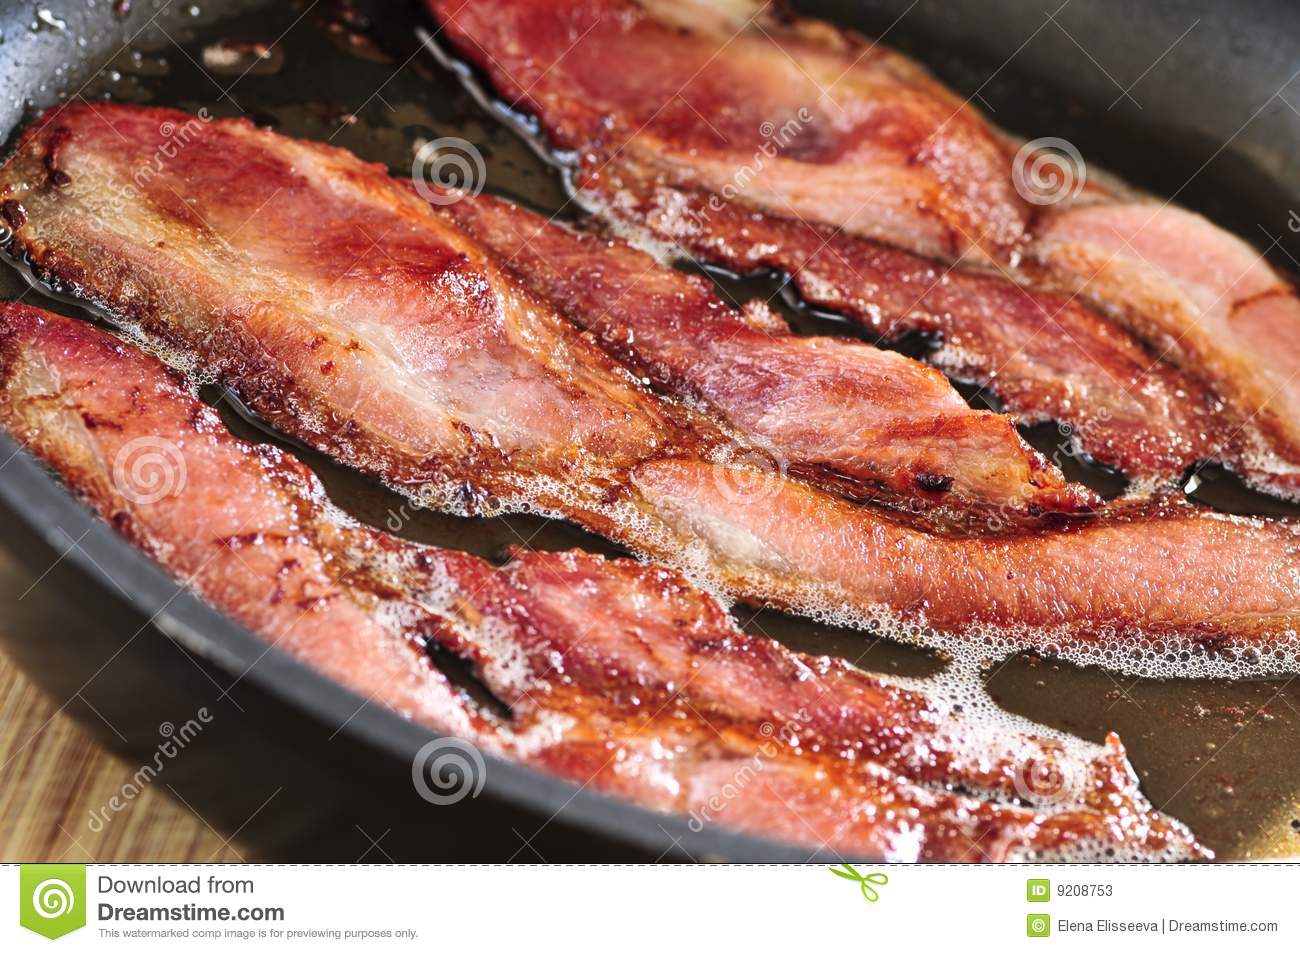 Bacon Frying In A Pan Stock Photos   Image  9208753